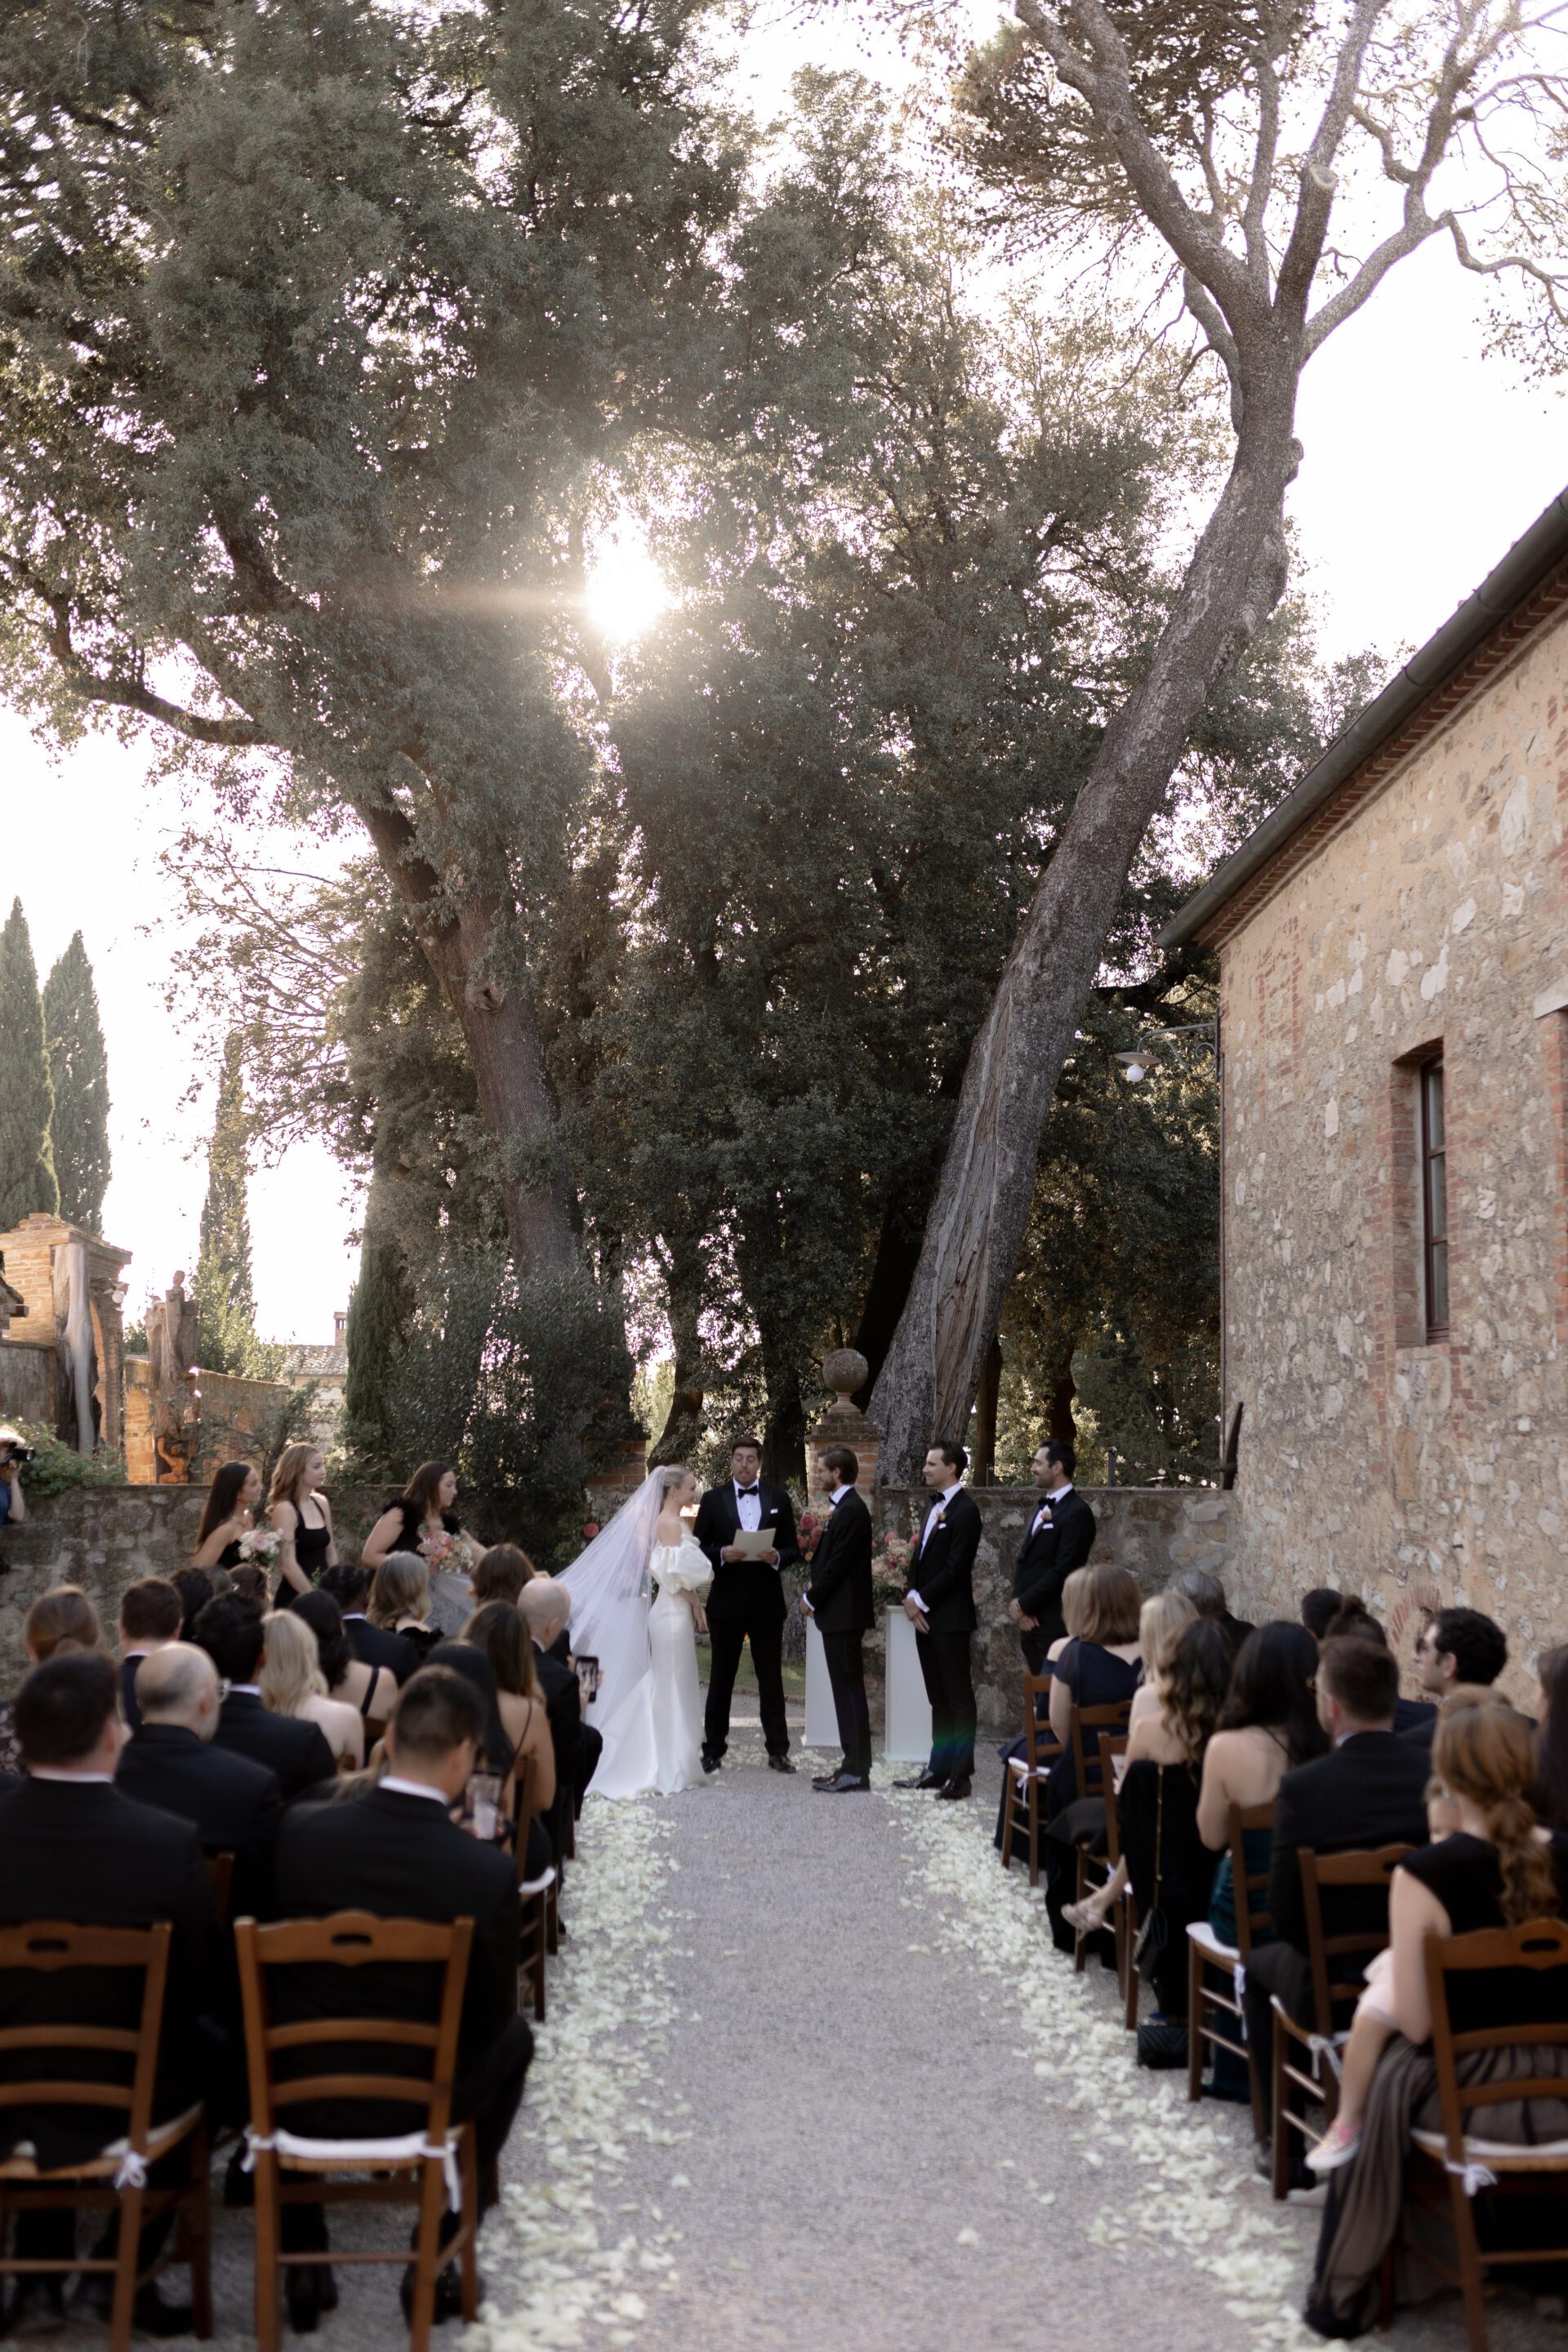 Destination wedding photographer captures Italian wedding ceremony